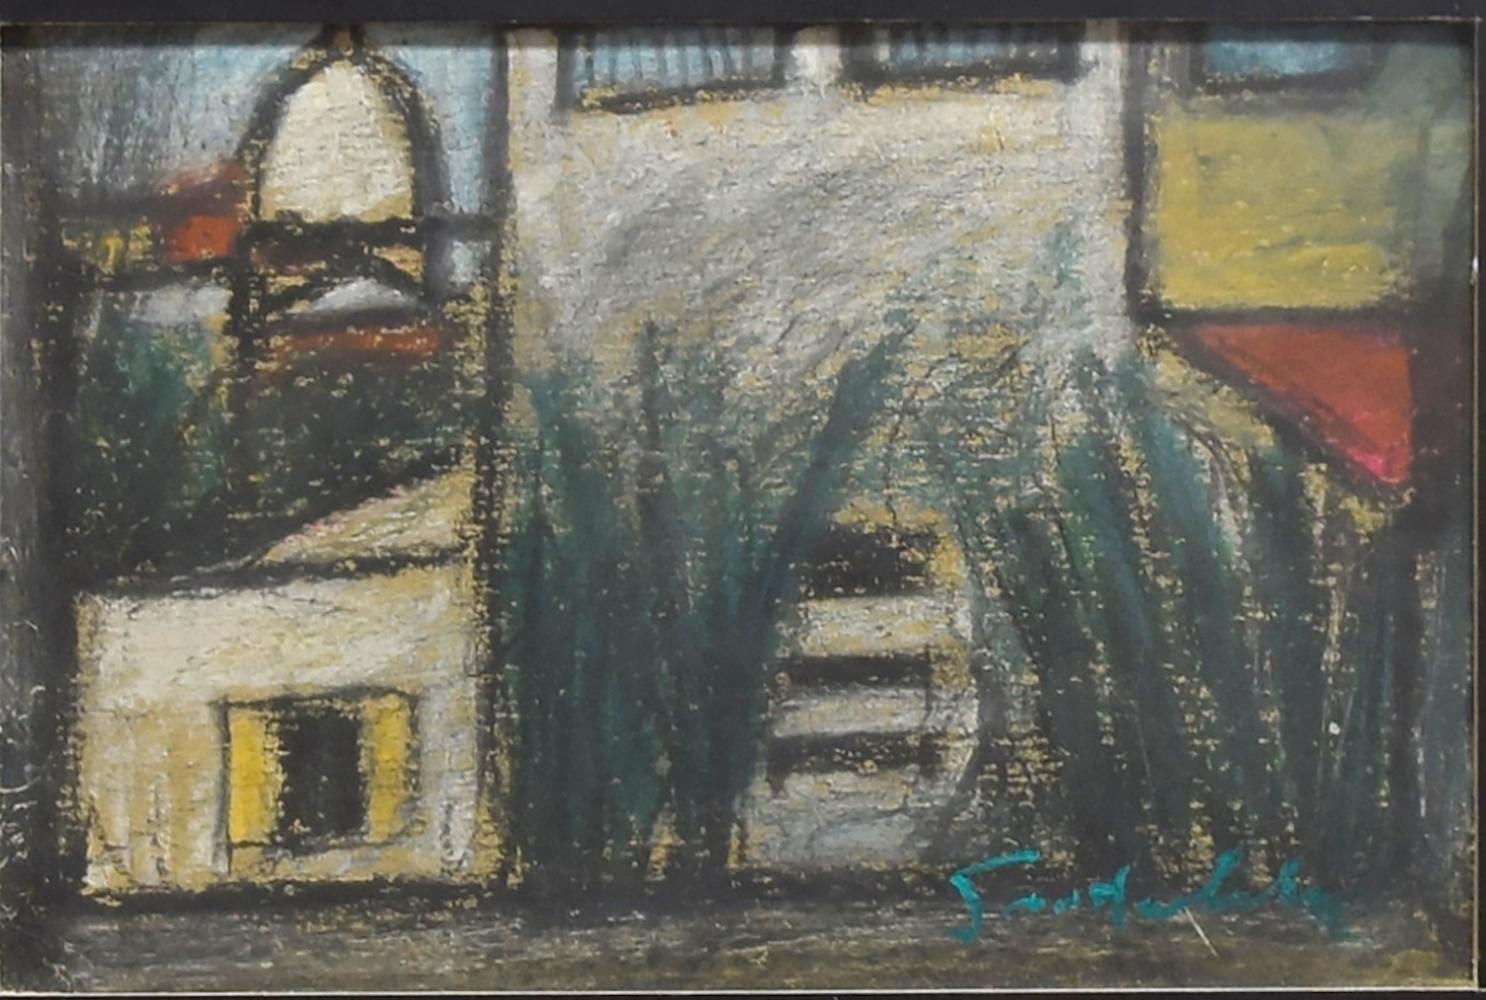 Houses - Original Charcoal Drawing by N. Gattamelata - 1970s